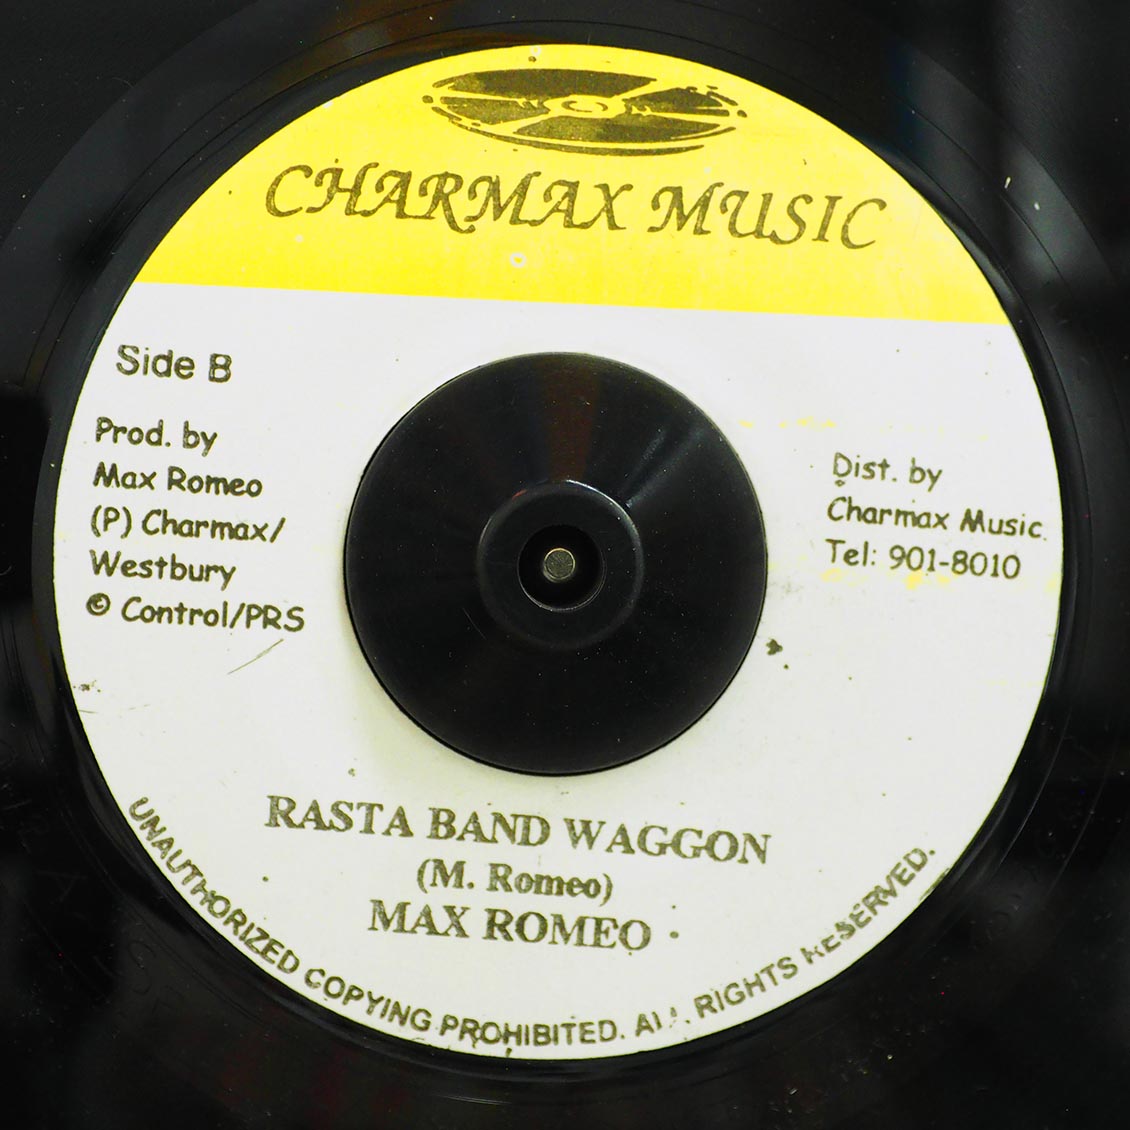 Max Romeo - Rasta Band Wagon